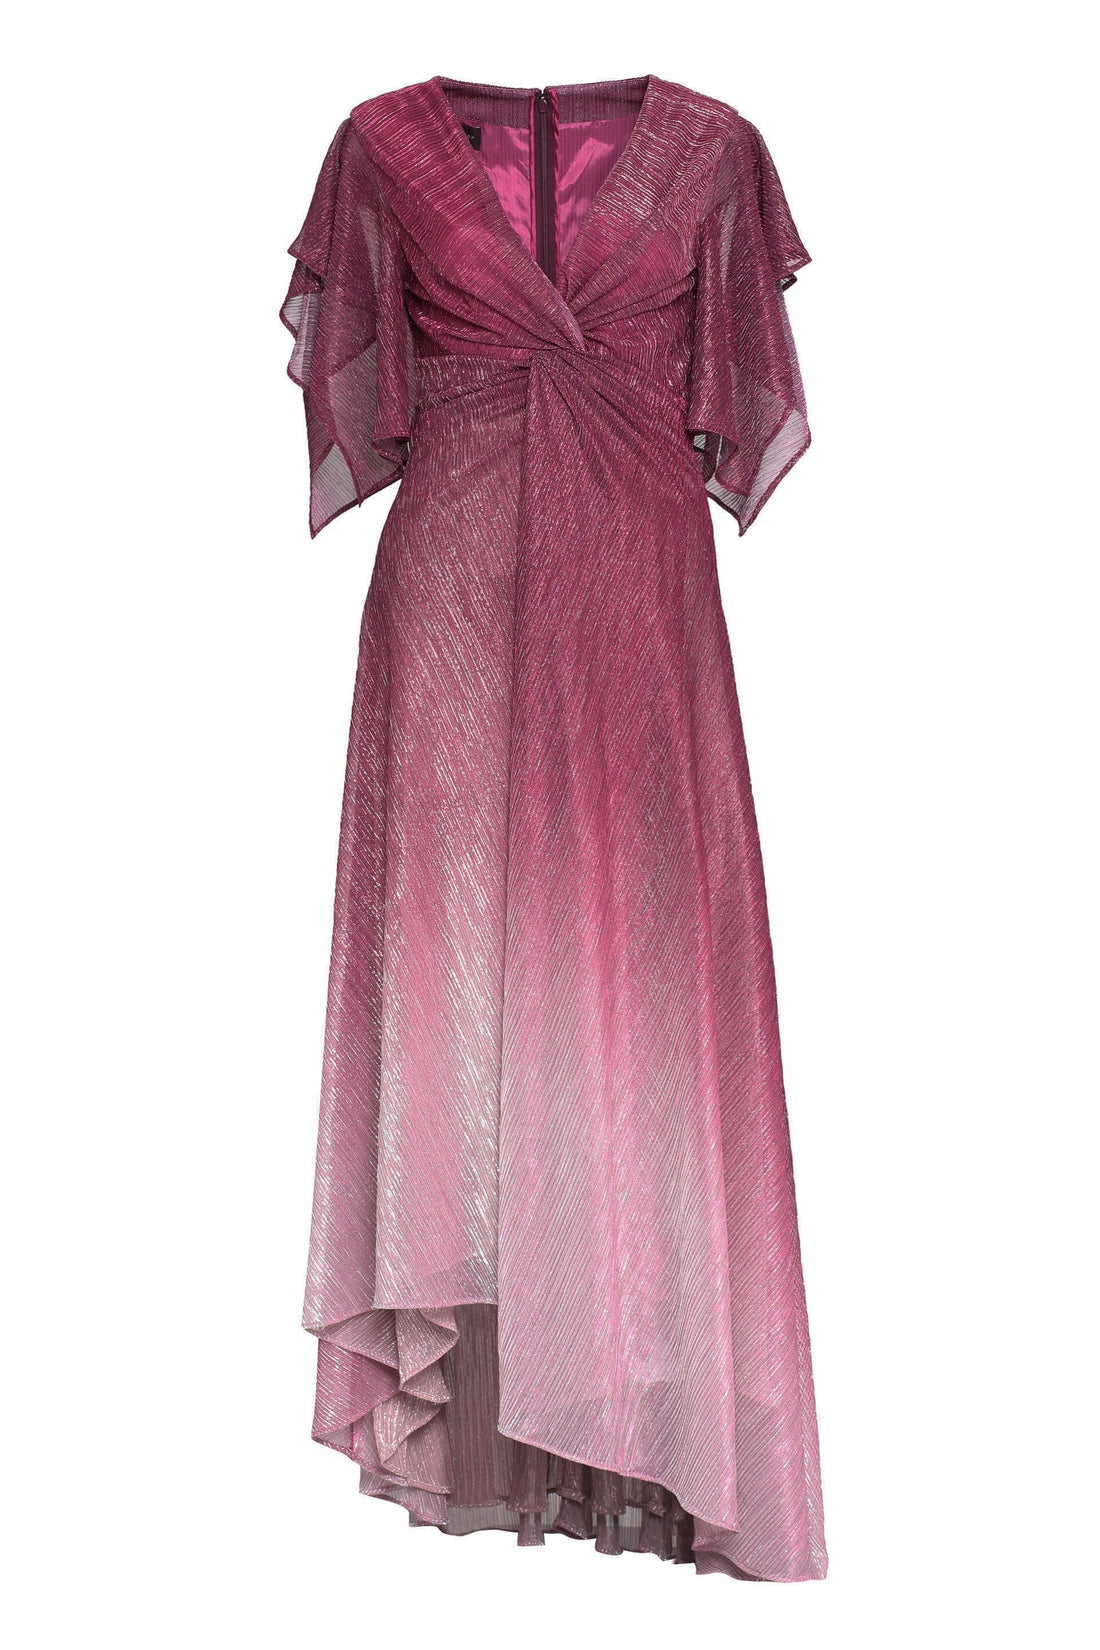 Talbot Runhof-OUTLET-SALE-Lurex draped dress-ARCHIVIST